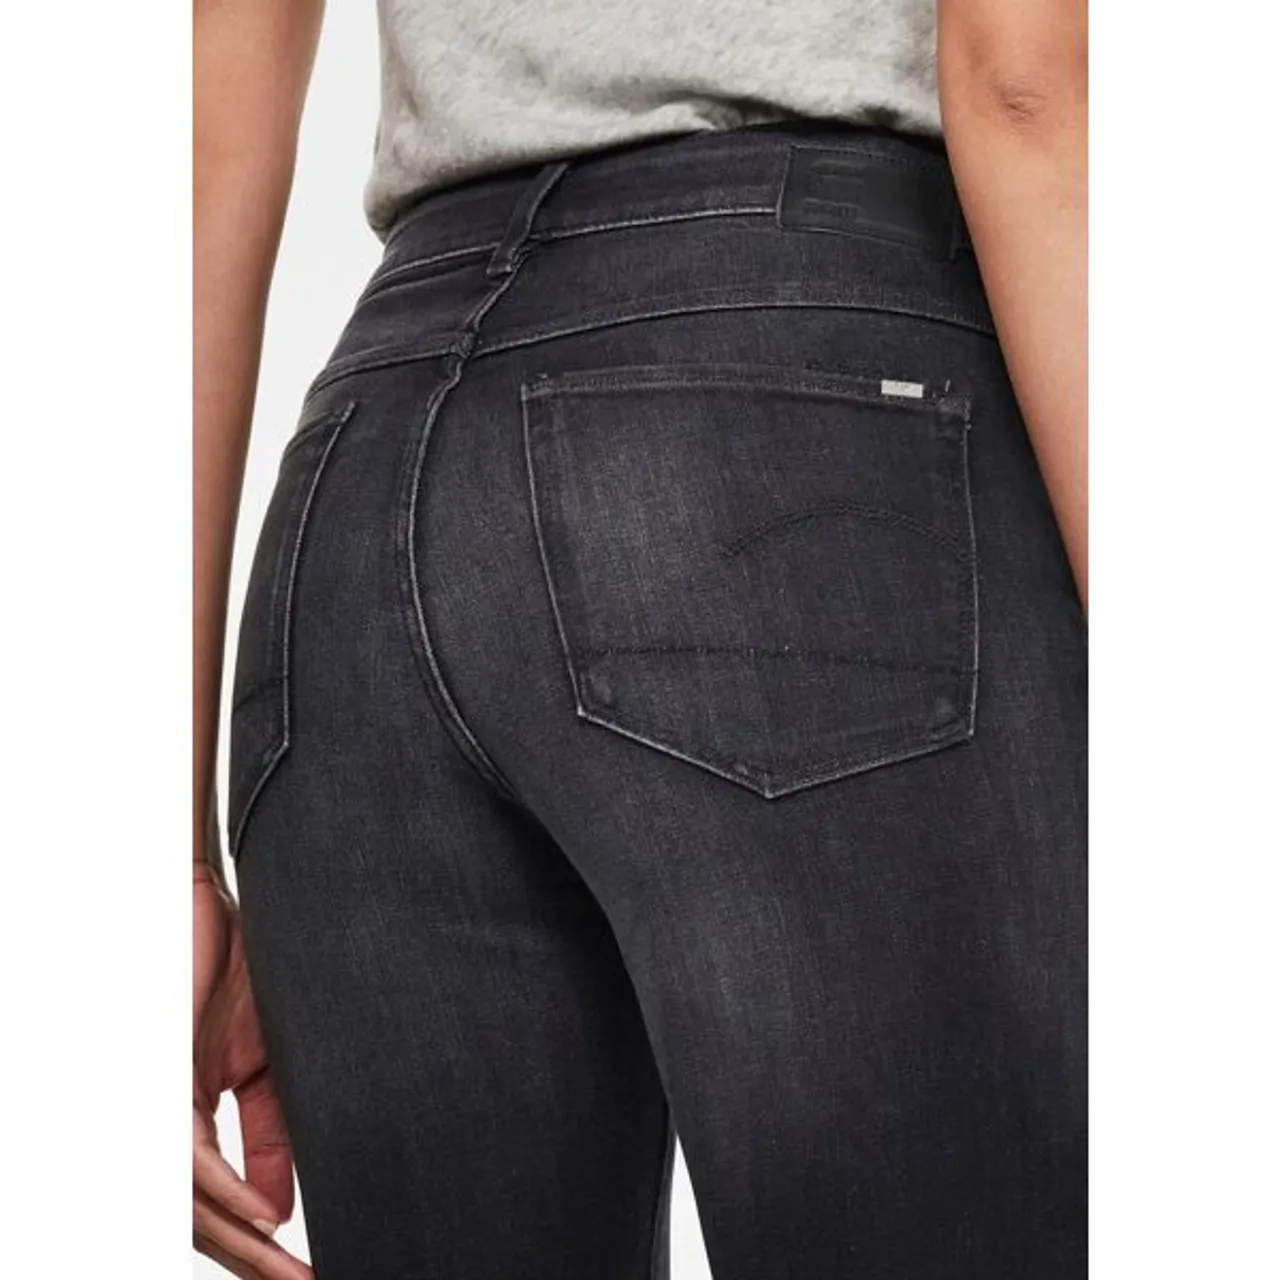 Skinny-fit-Jeans G-STAR RAW "3301 High Skinny" Gr. 26, Länge 32, schwarz (worn in coal (black)) Damen Jeans Röhrenjeans